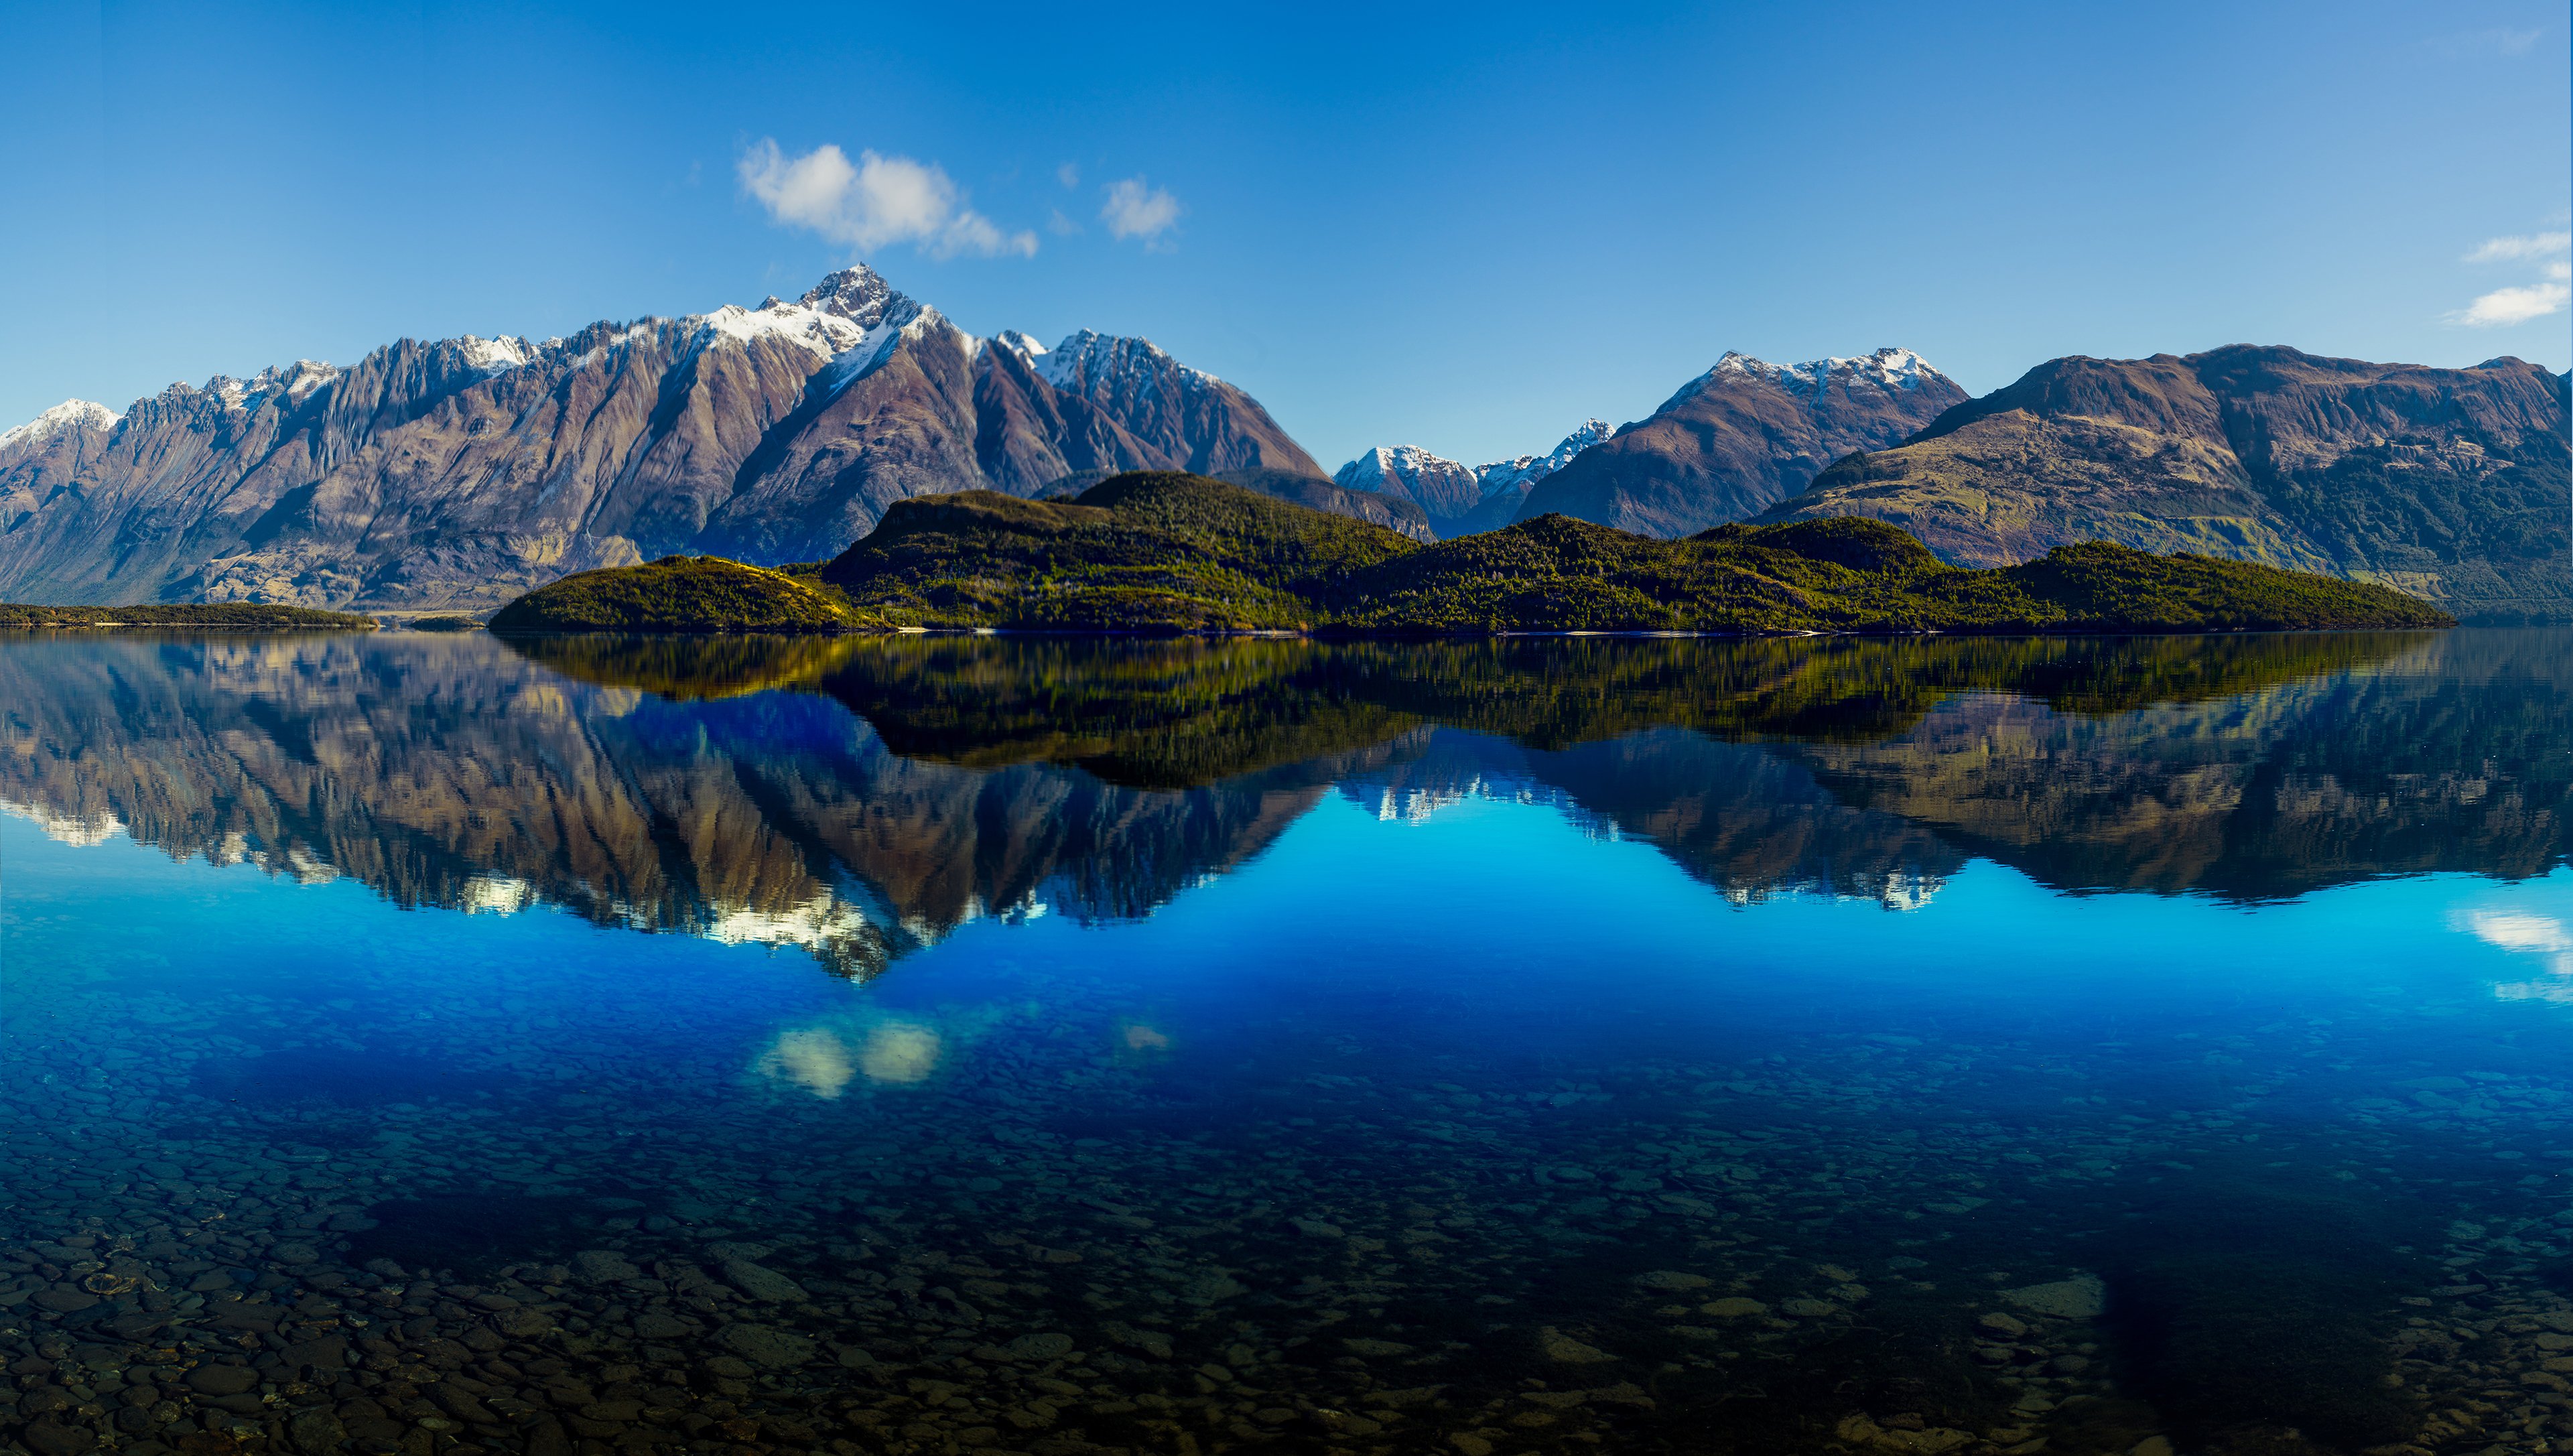 Fondos de pantalla Lago reflejando montañas